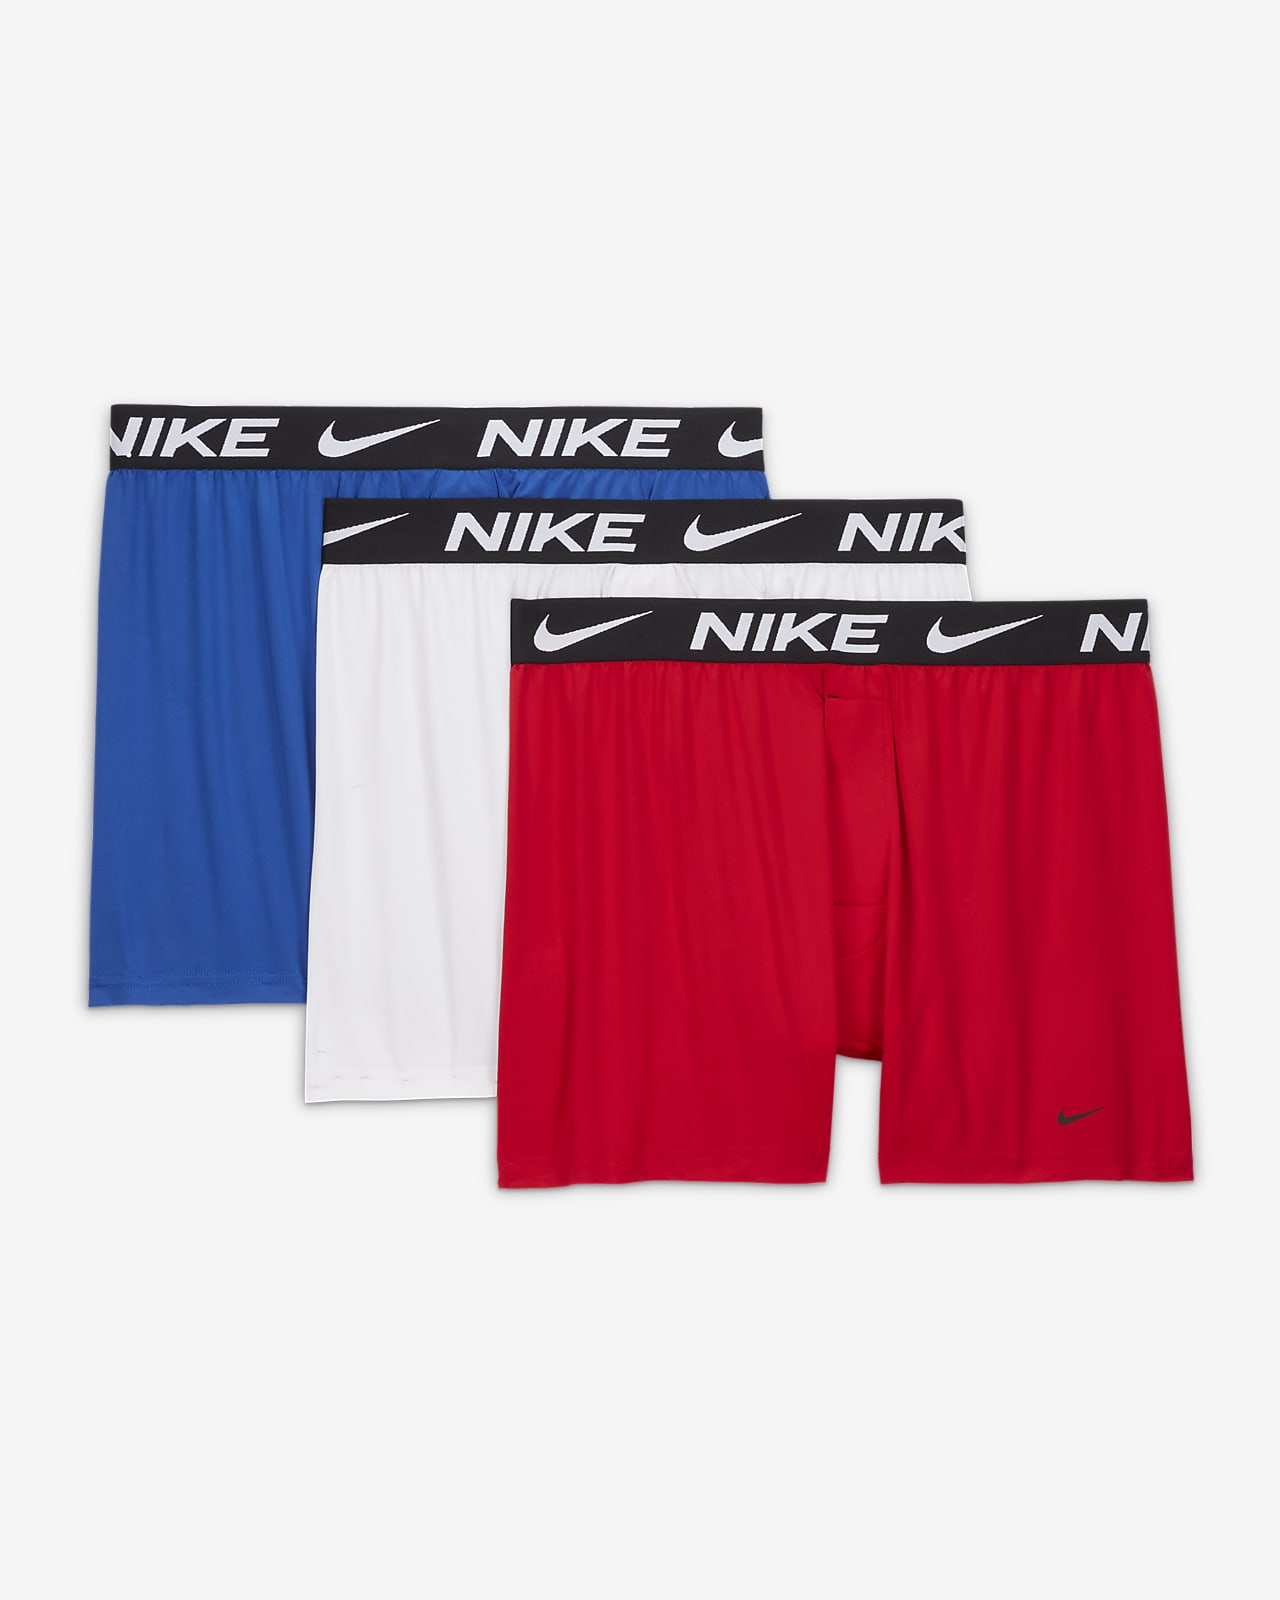 Men's boxers Nike